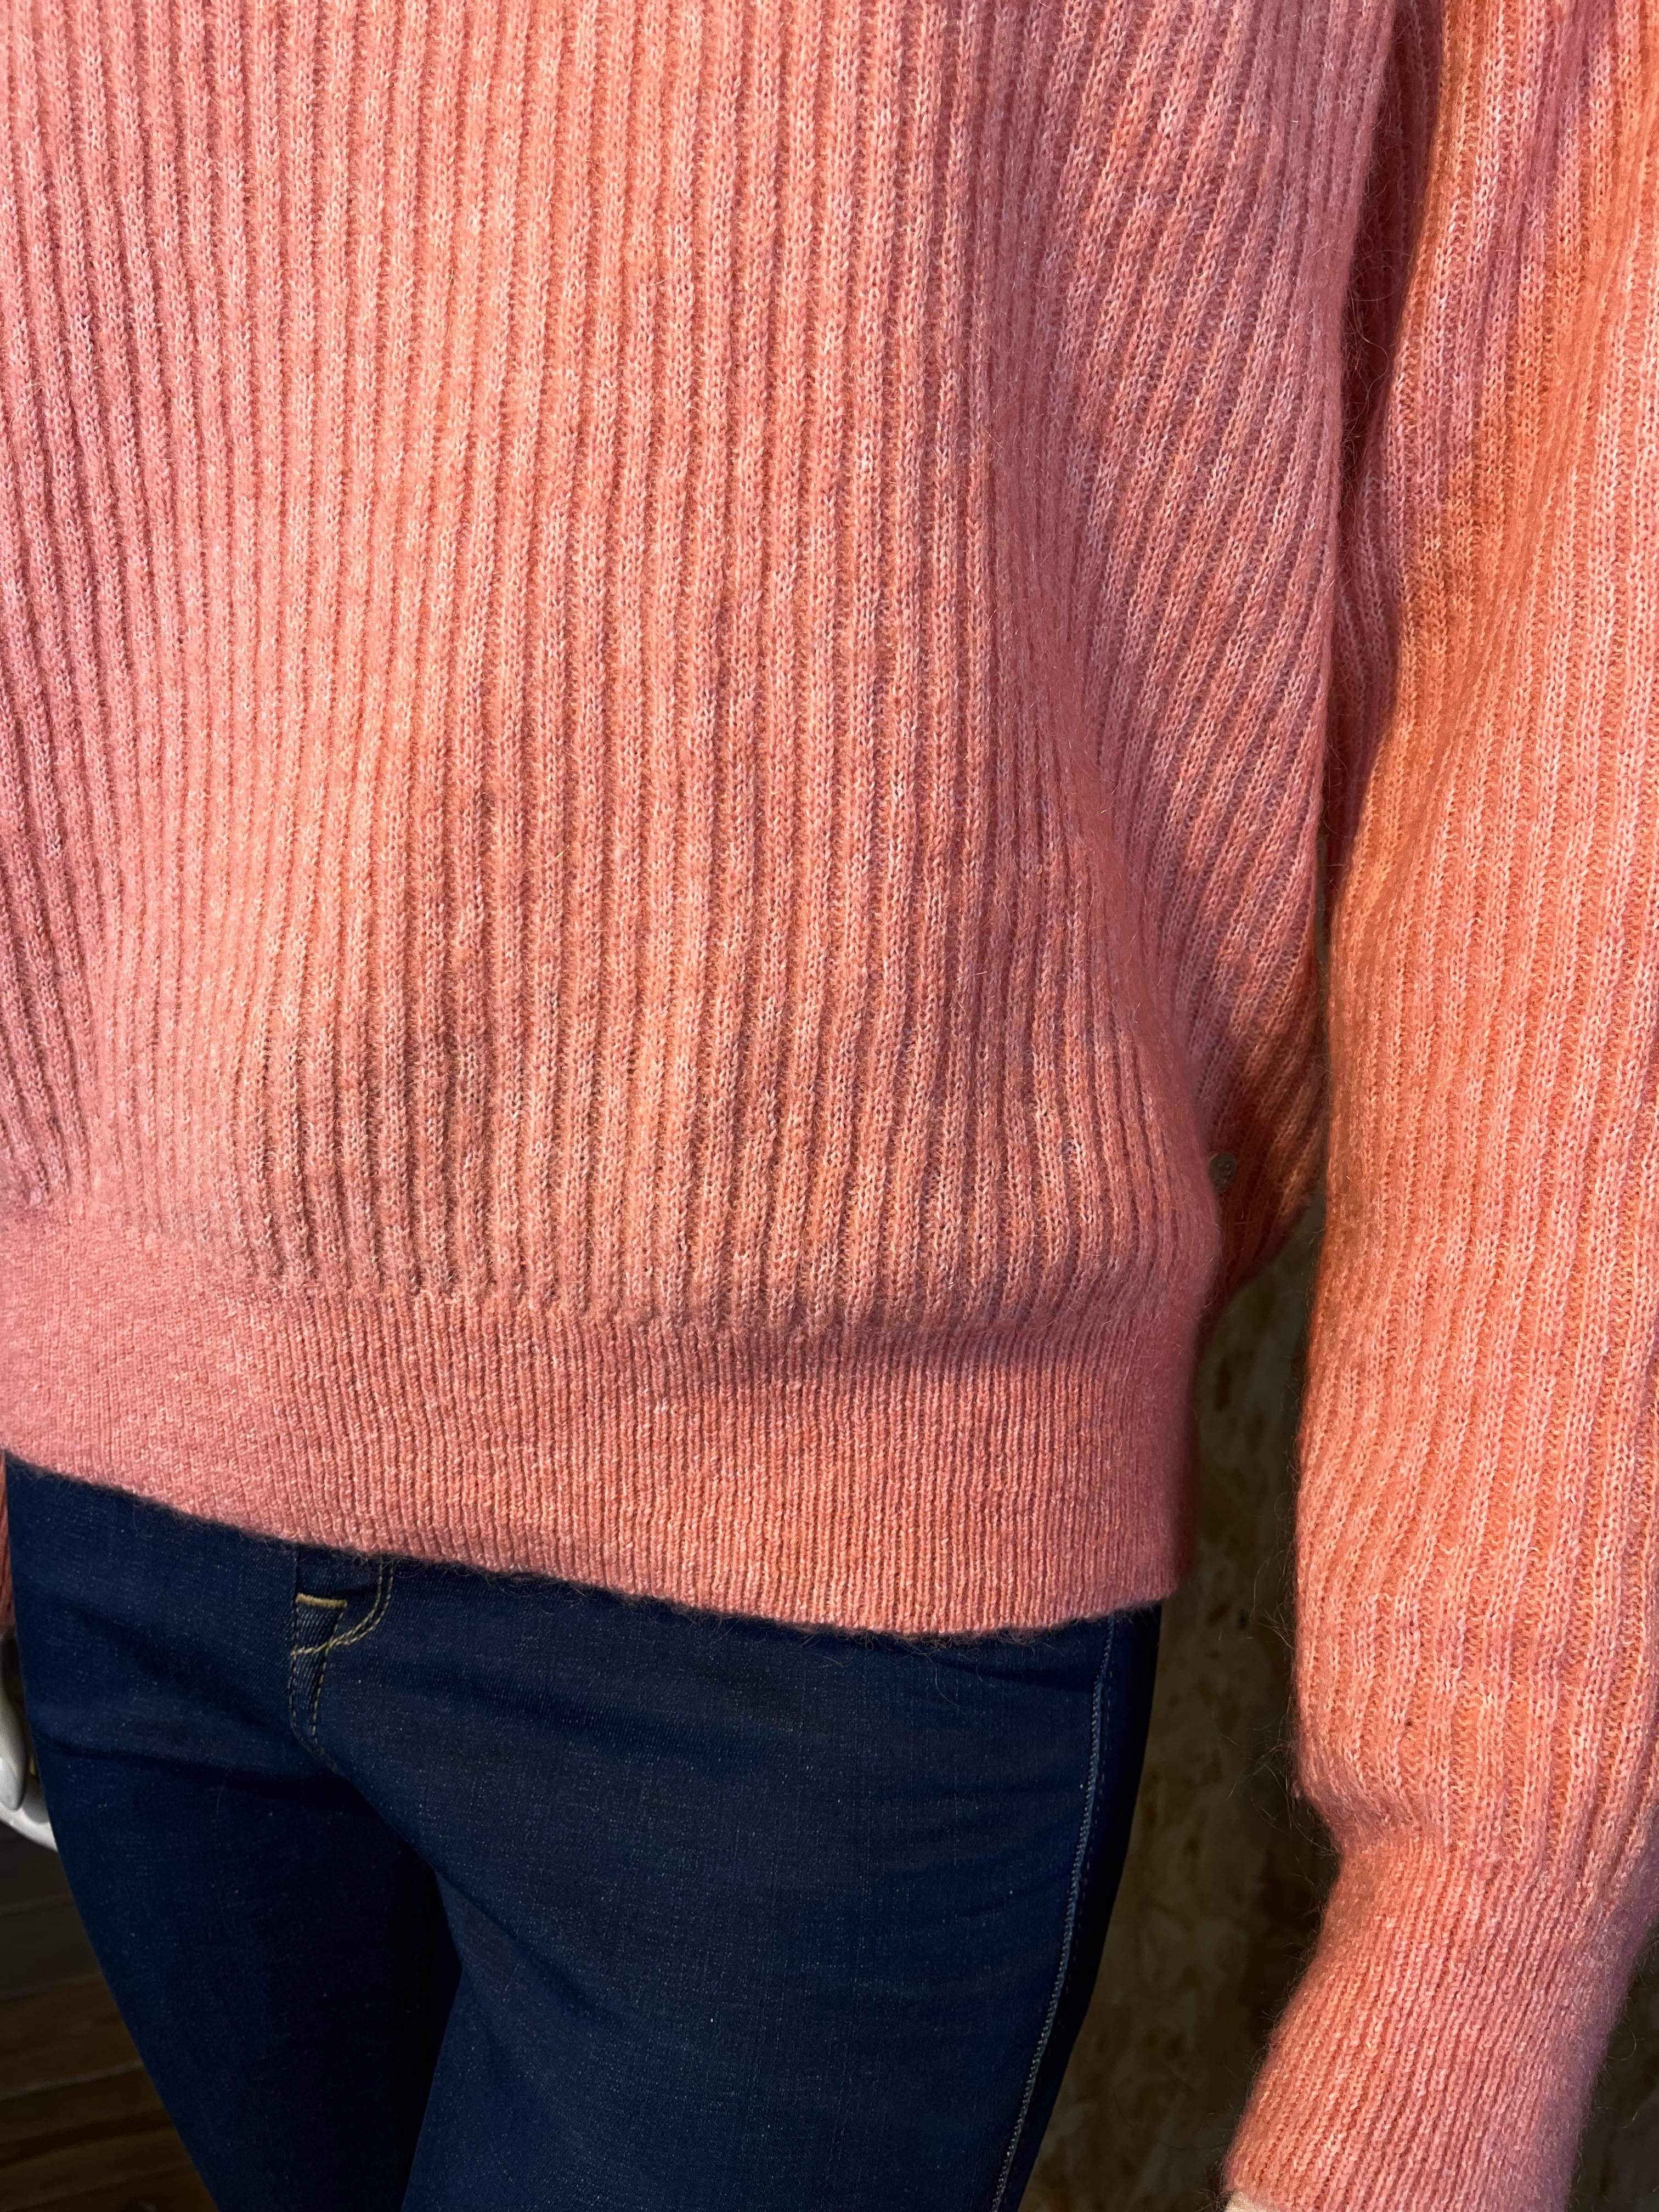 Day Birger et Mikkelsen - Sweater -Size: XS